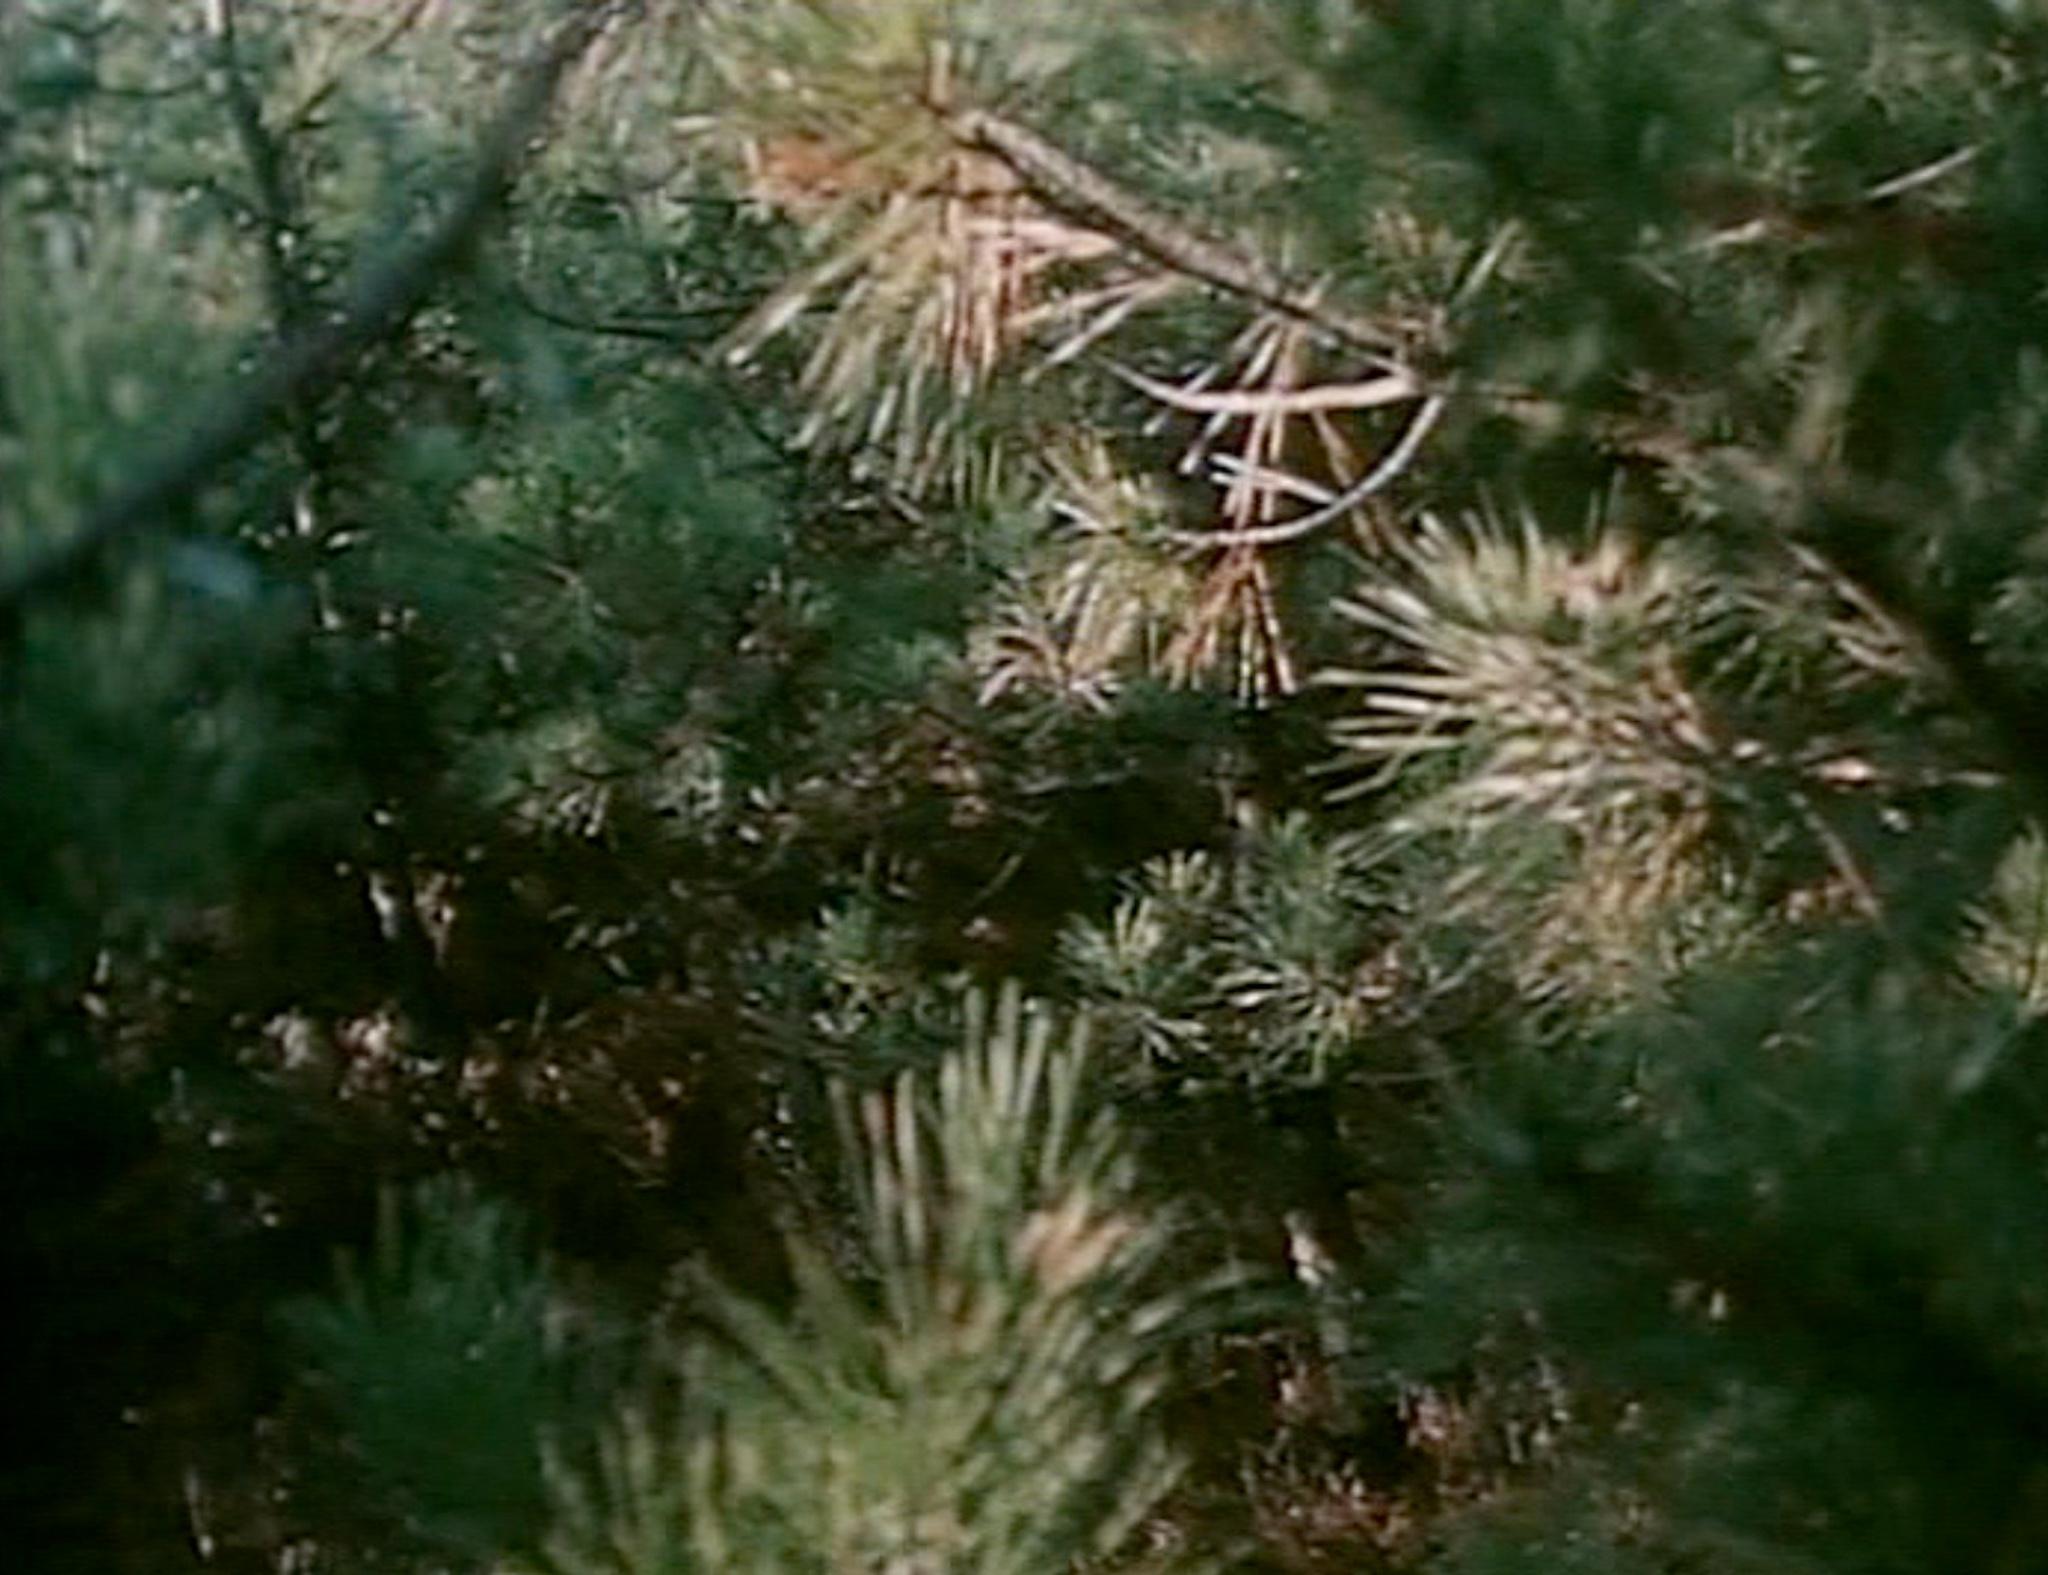 a close up of sunlit pine needles